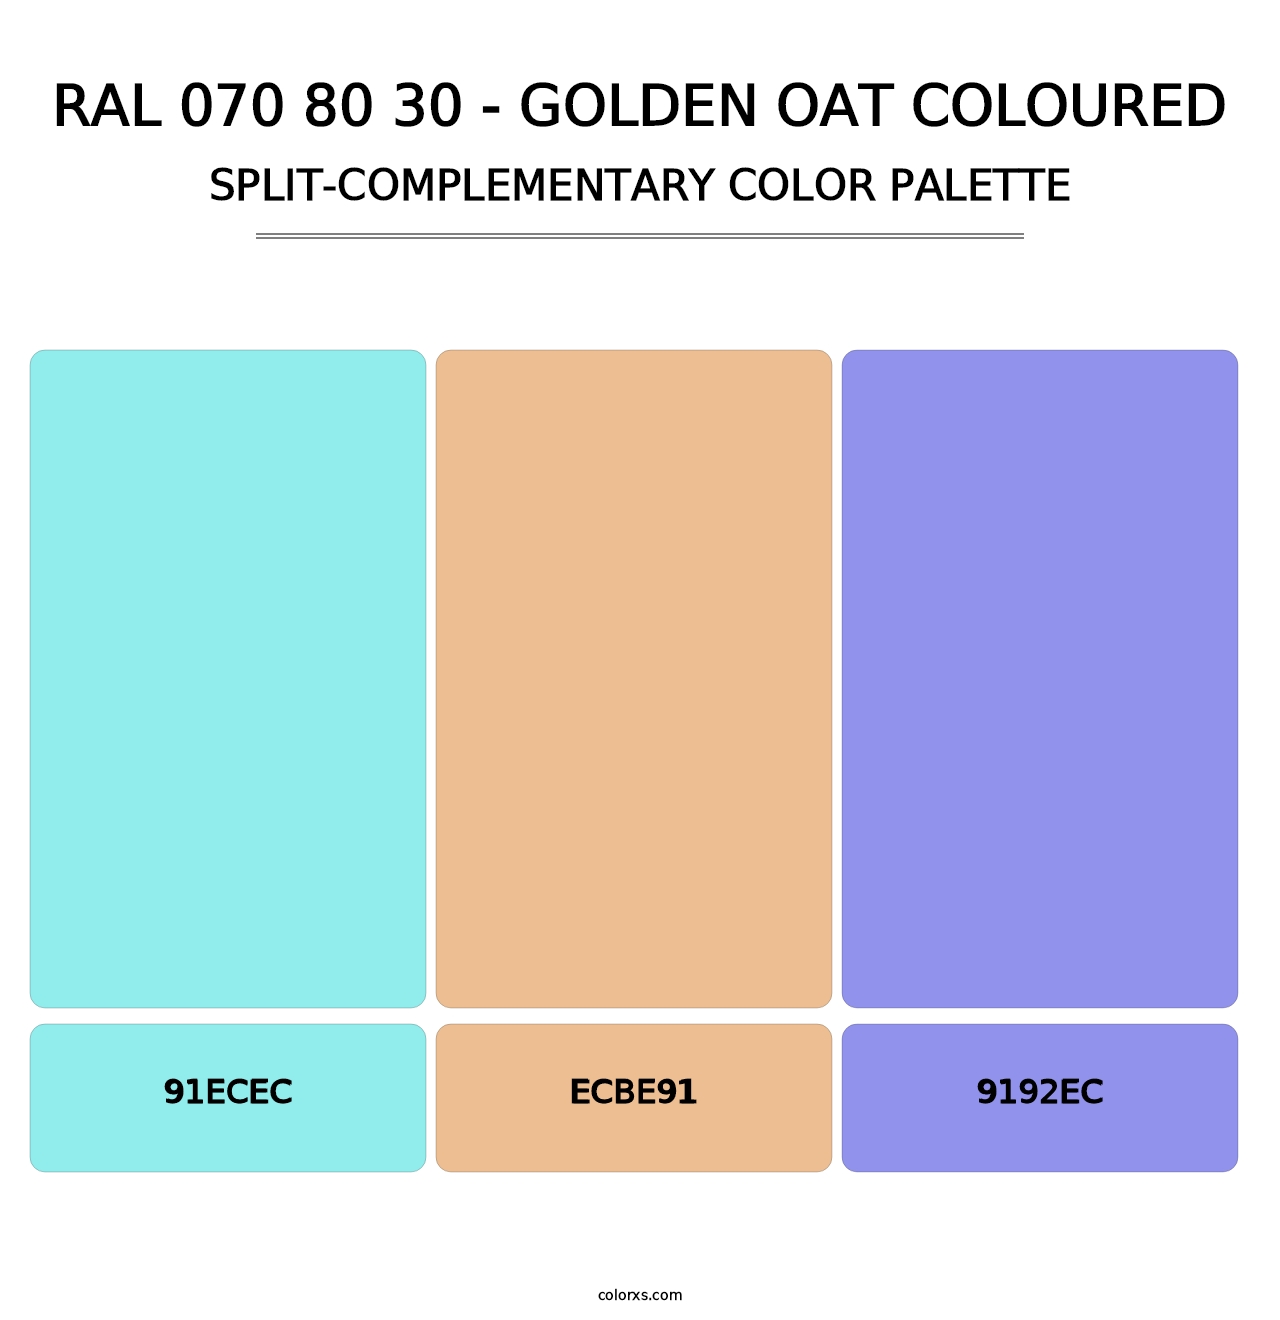 RAL 070 80 30 - Golden Oat Coloured - Split-Complementary Color Palette